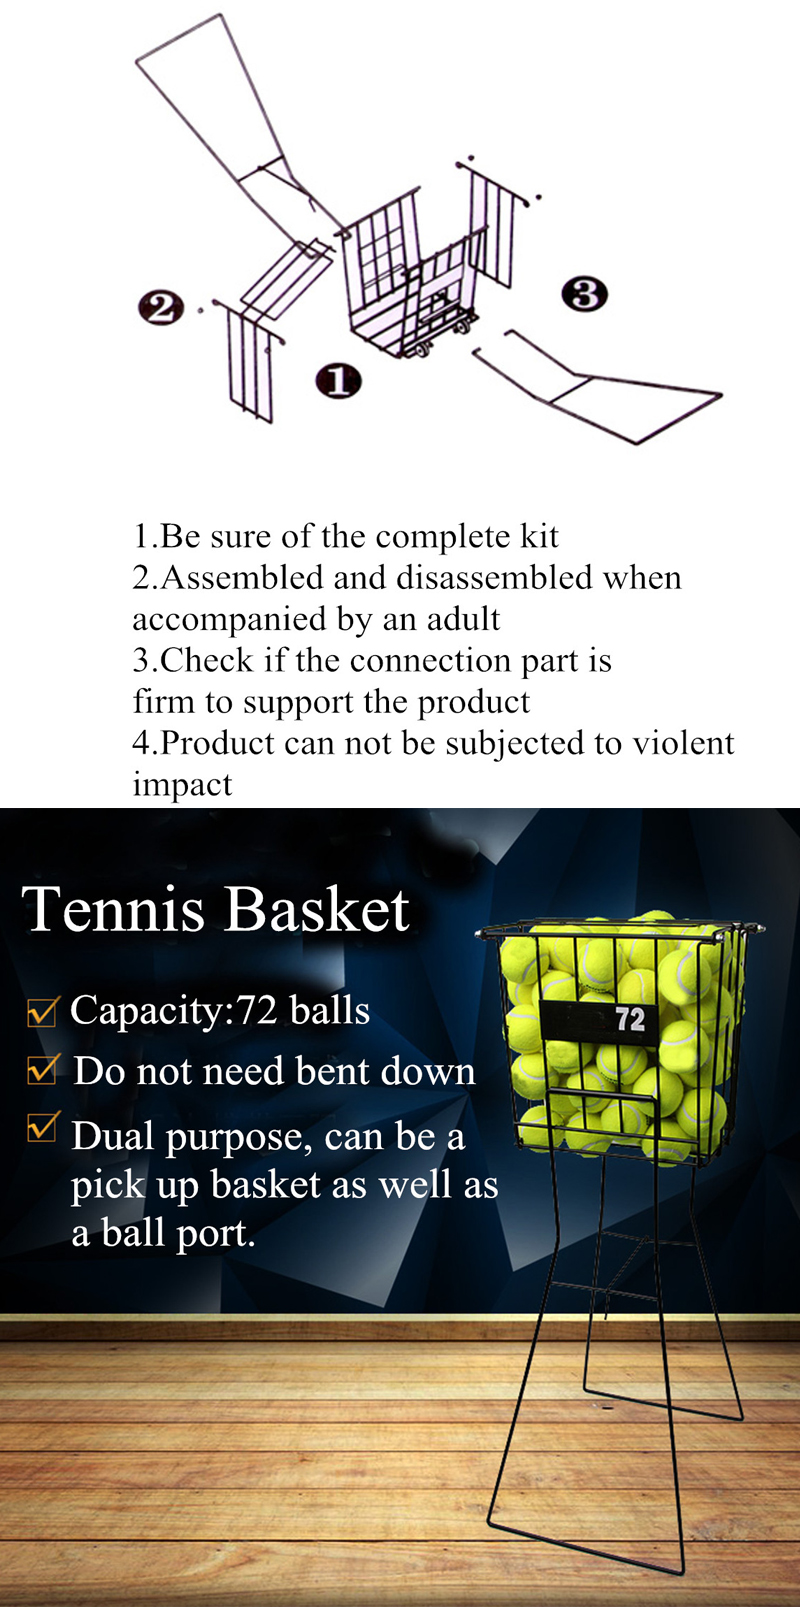 Tennis-Pick-Up-Hopper-Portable-Outdoor-Sport-Ball-Picker-Stainless-Steel-Picking-Machine-1403124